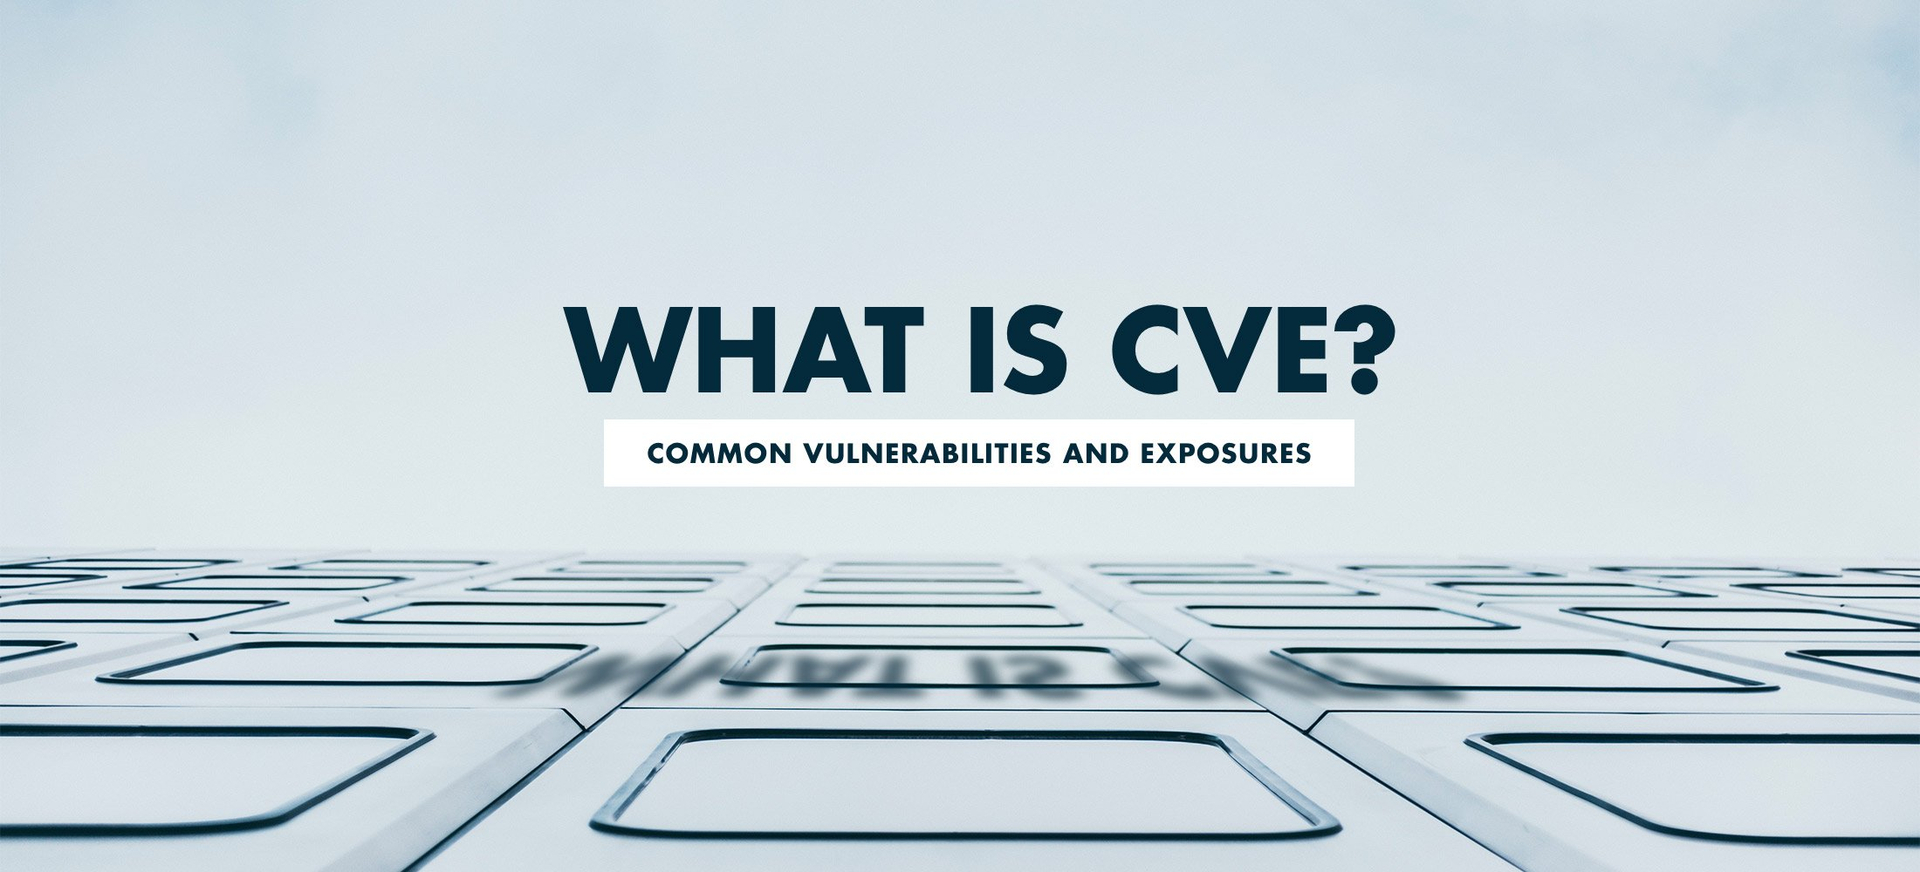 Who developed CVE?